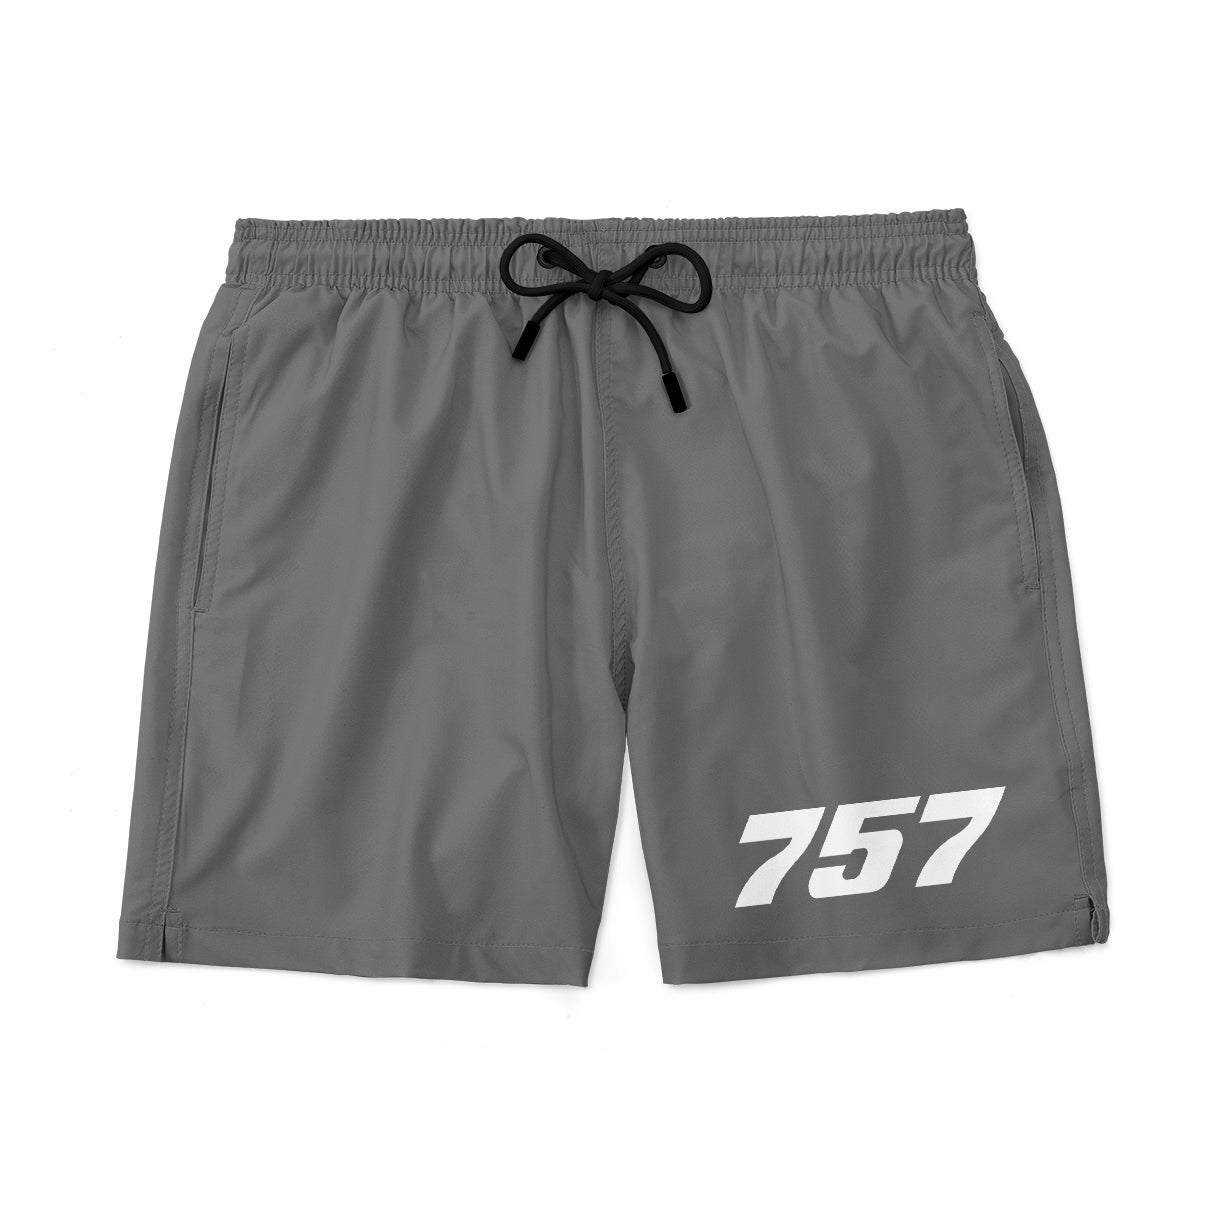 757 Flat Text Designed Swim Trunks & Shorts